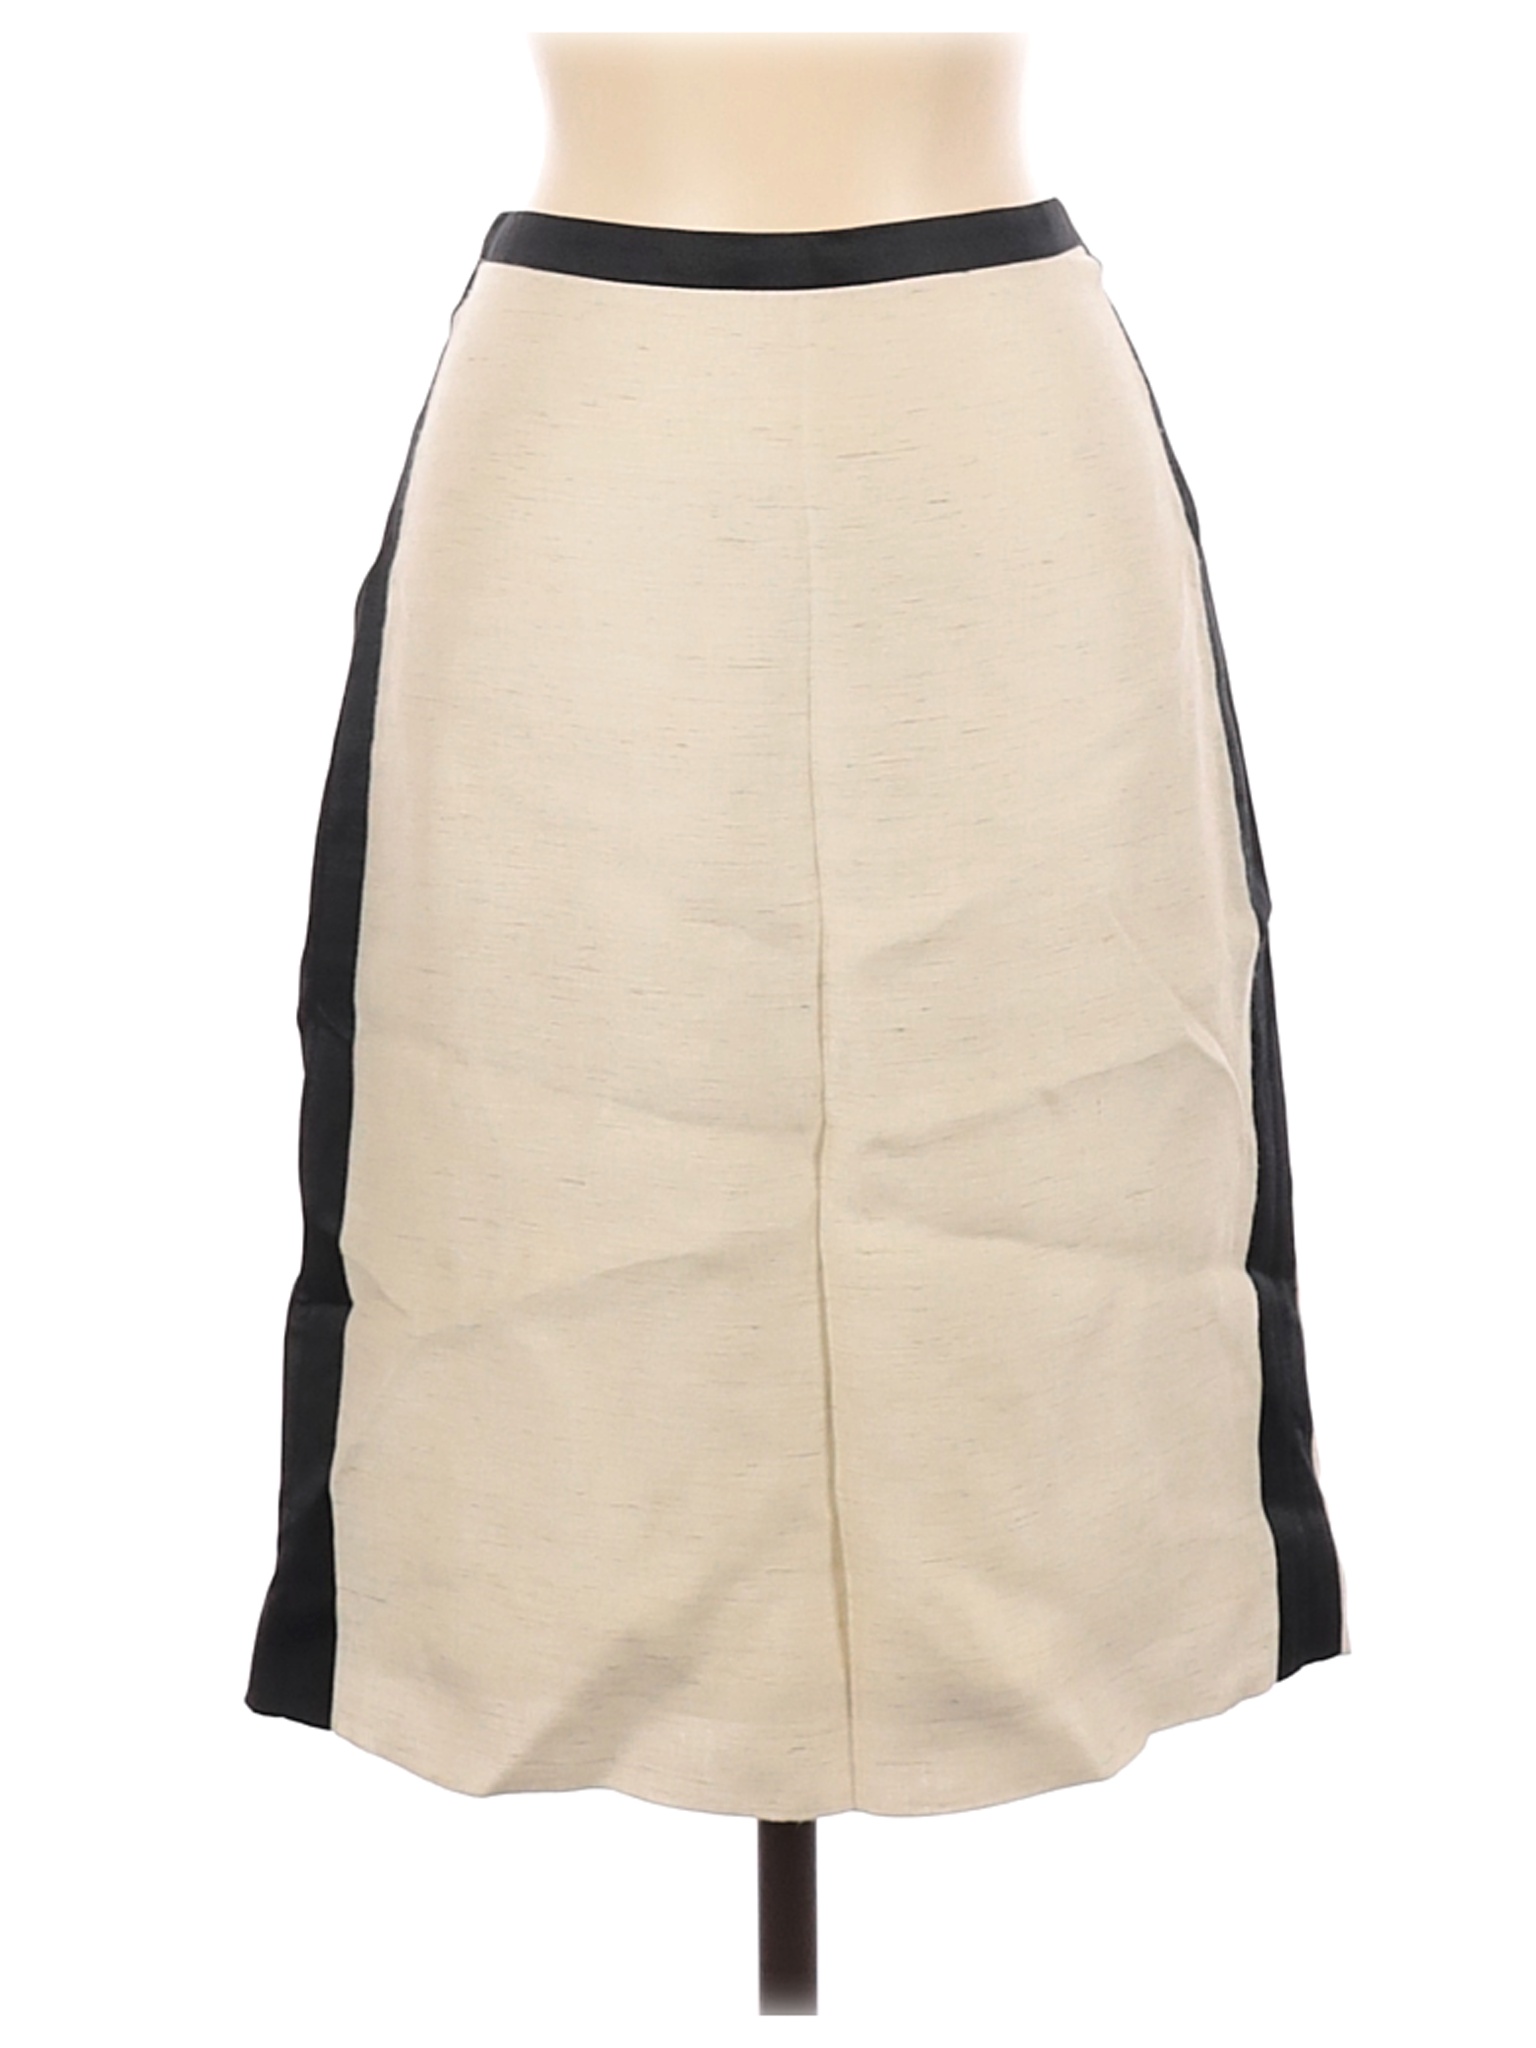 J.Crew Women Brown Casual Skirt 4 | eBay